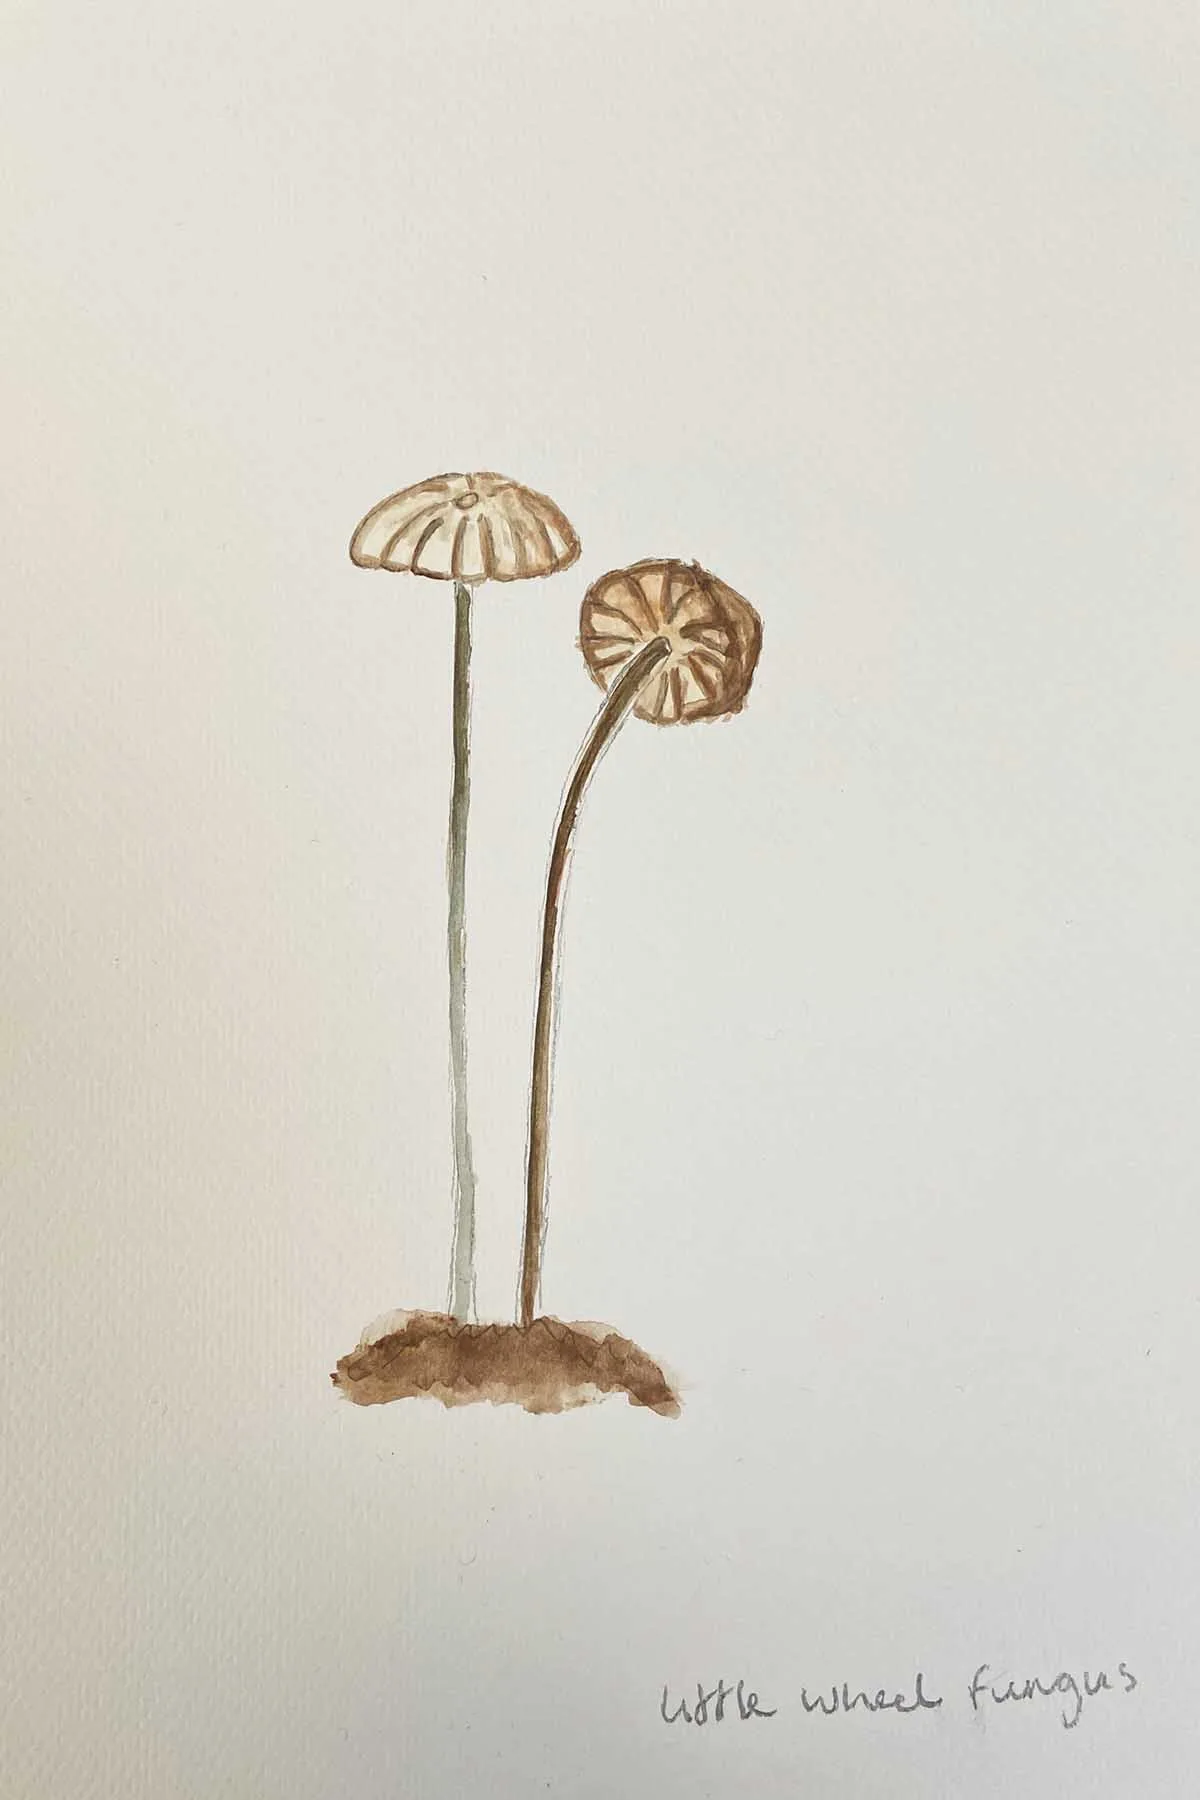 Painted little wheel fungus